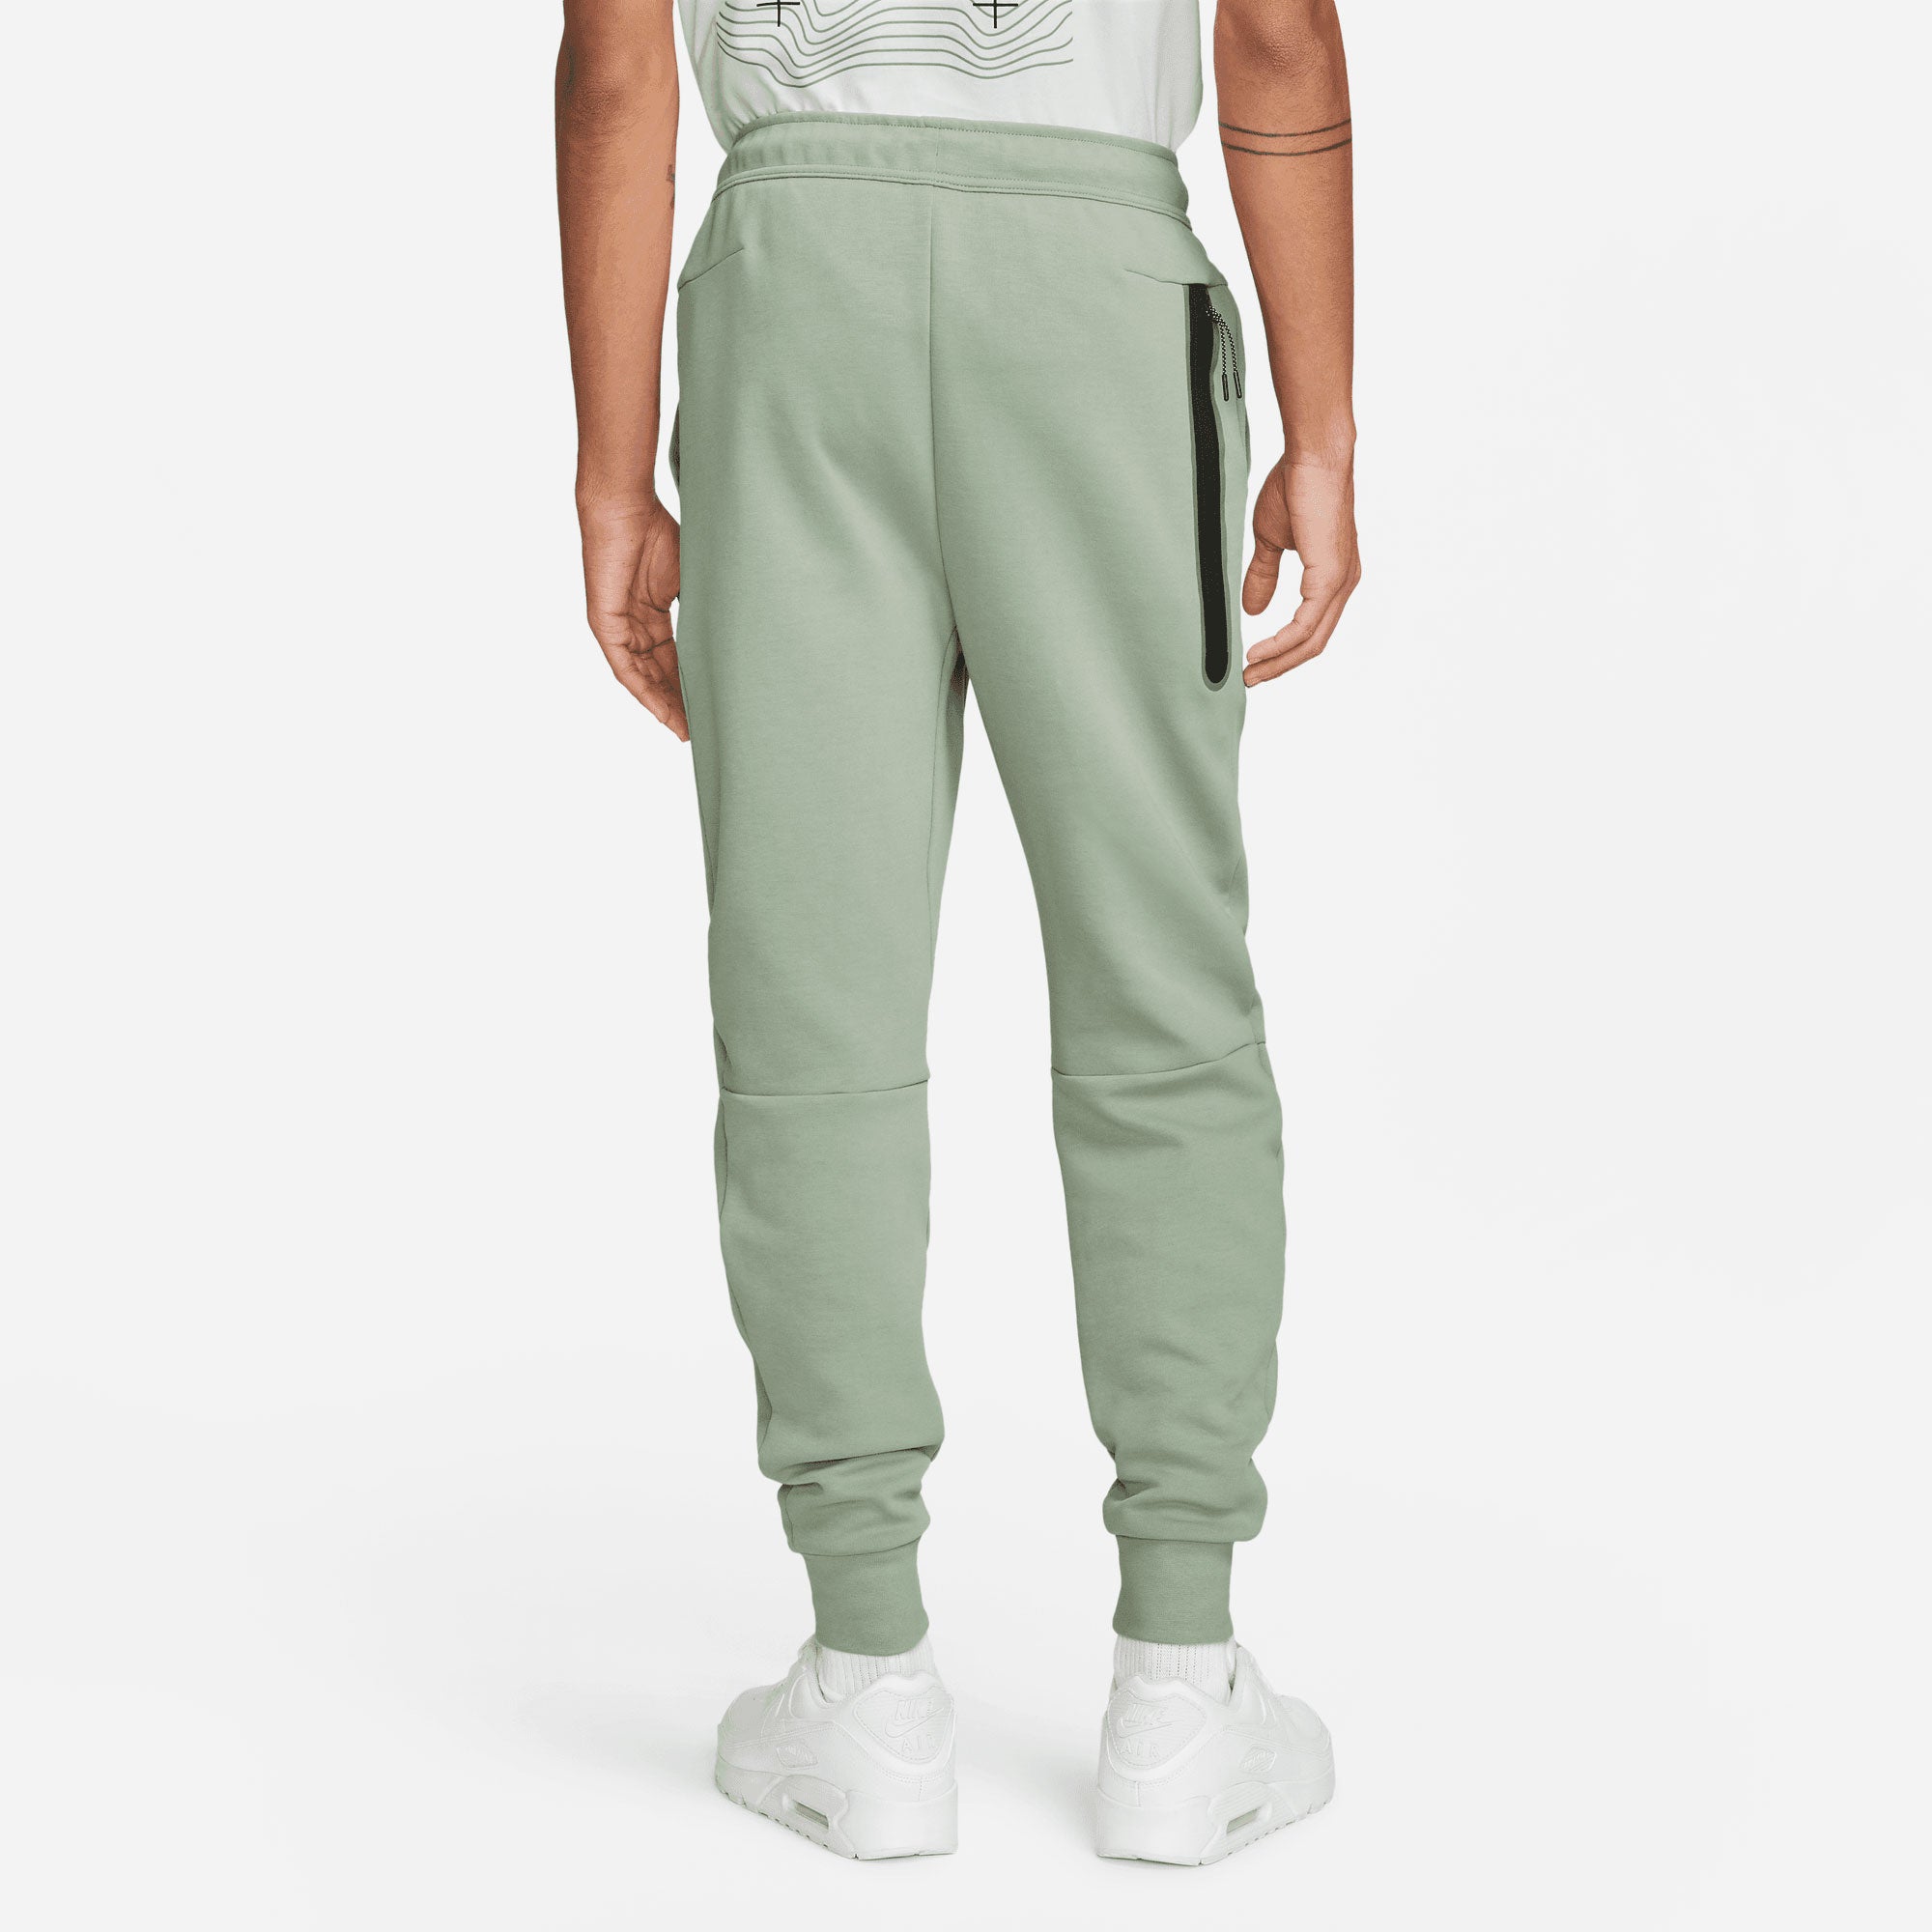 Nike Tech Fleece Men's Pants Green (2)